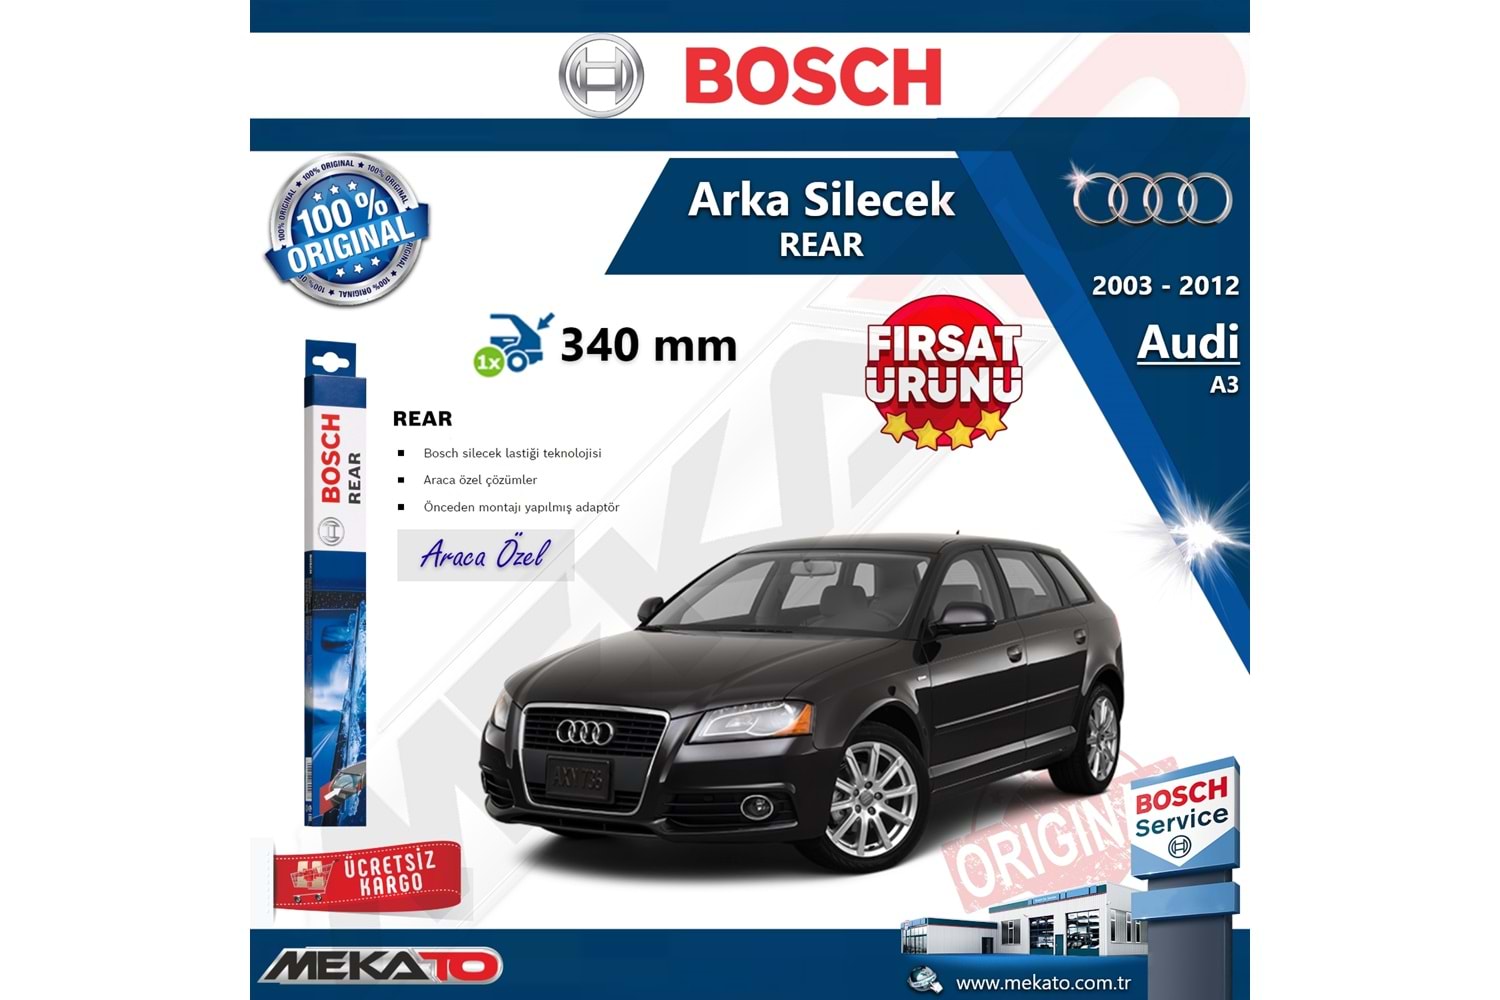 Audi A3 Arka Silecek Bosch Rear 2003-2012